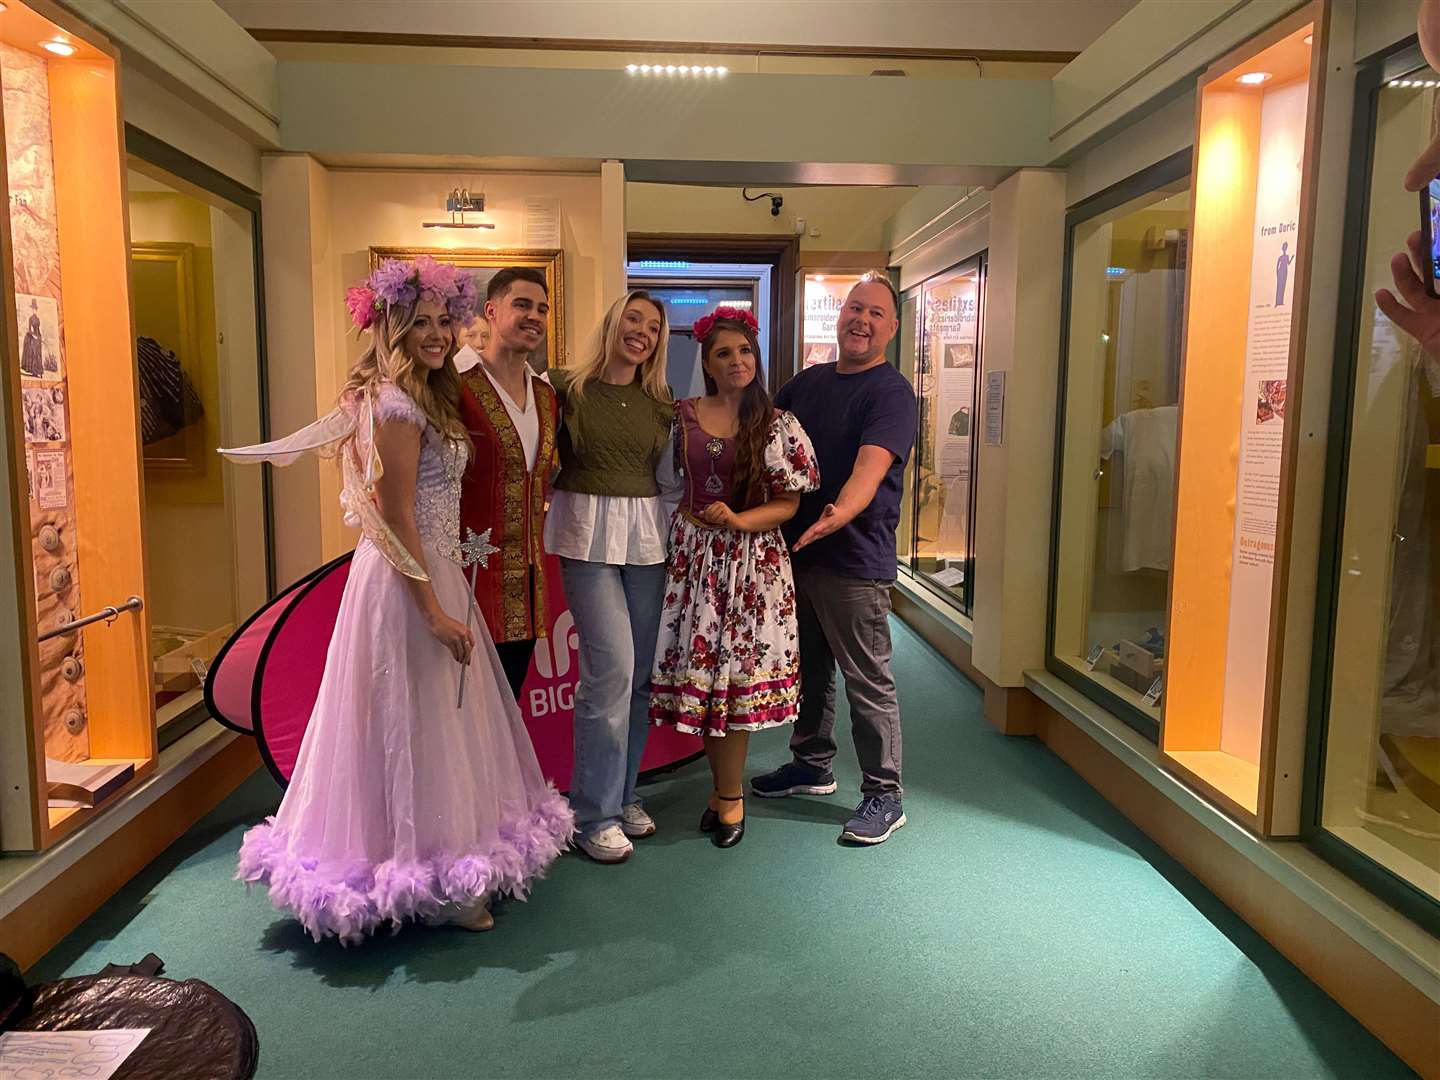 Cast members from the Hazlitt Theatre's Sleeping Beauty panto met the kmfm team at today's launch. Picture: Sam Lawrie